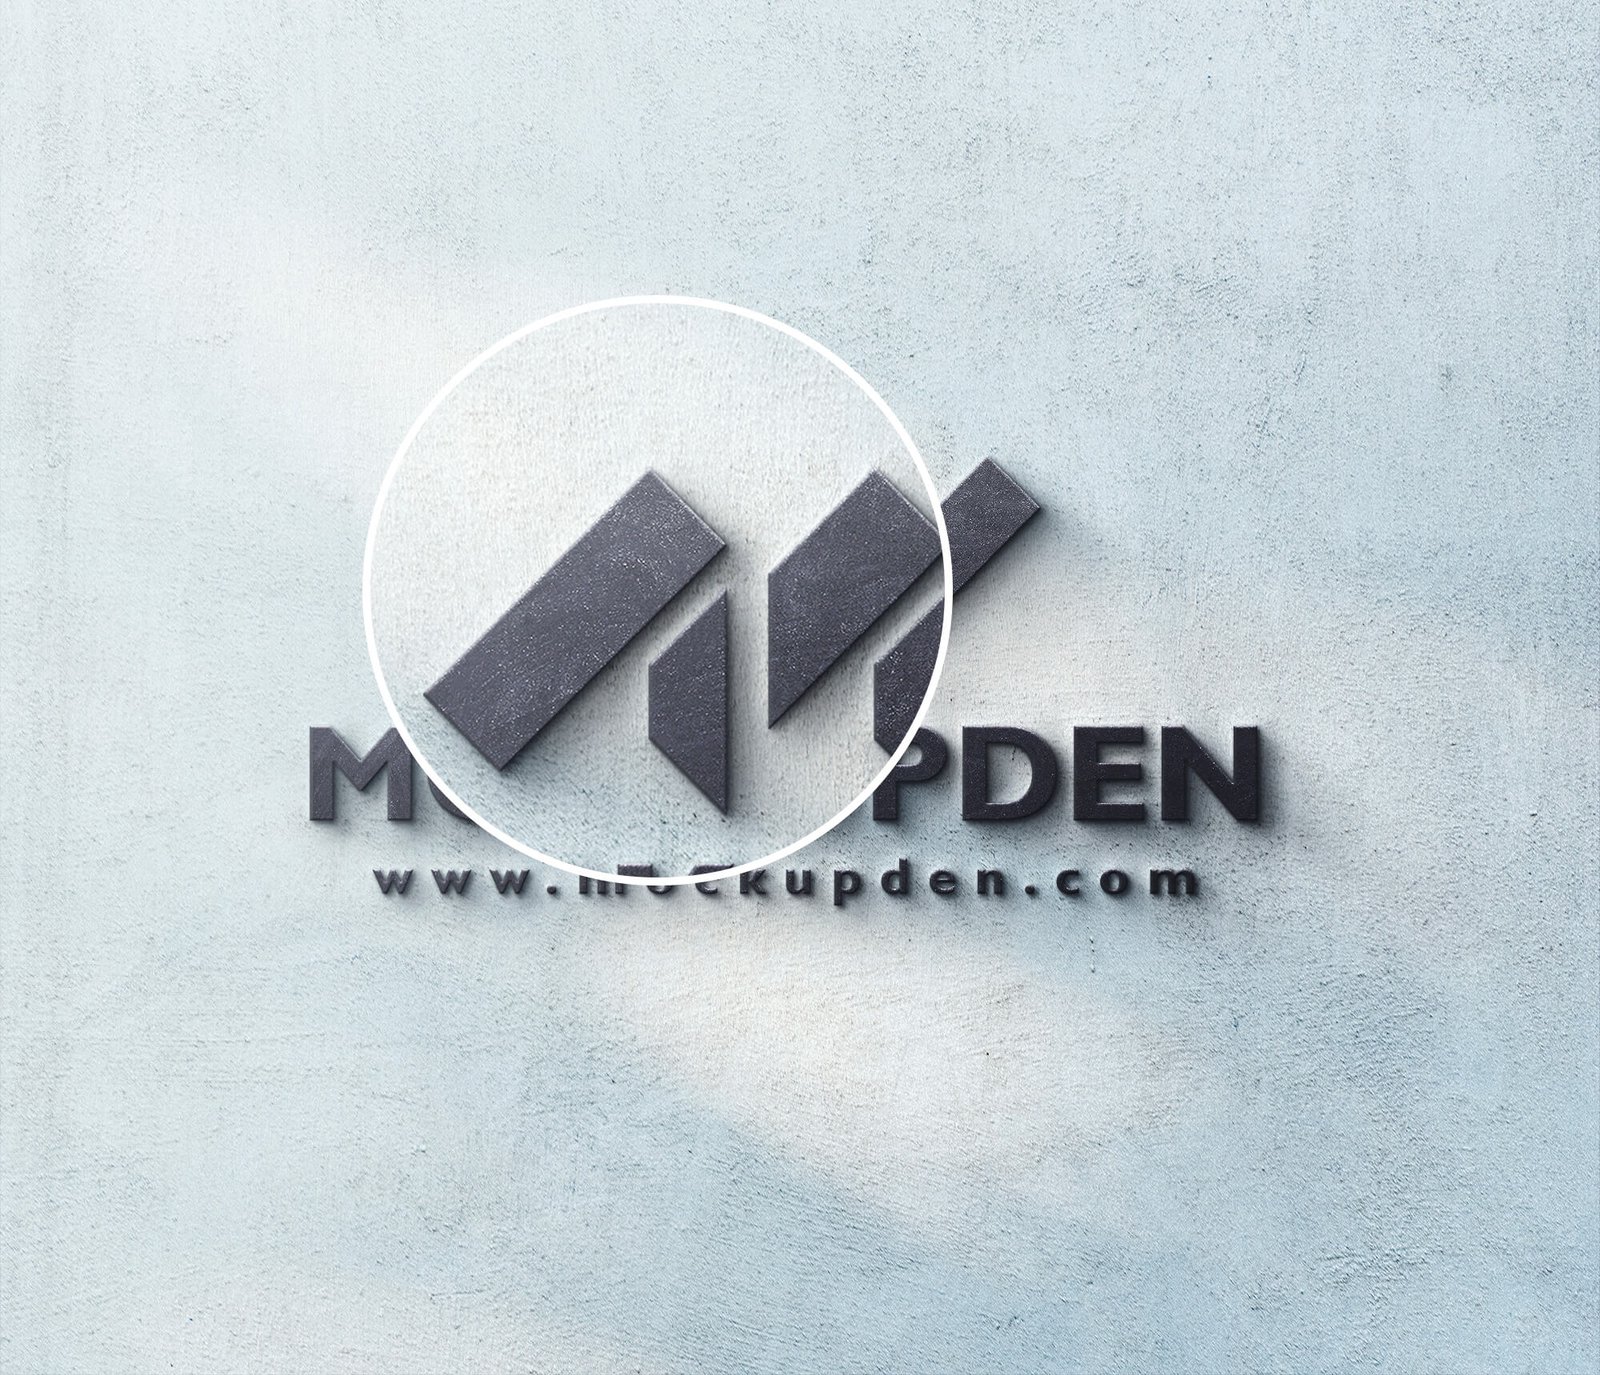 3d logo mockup psd free download 2020